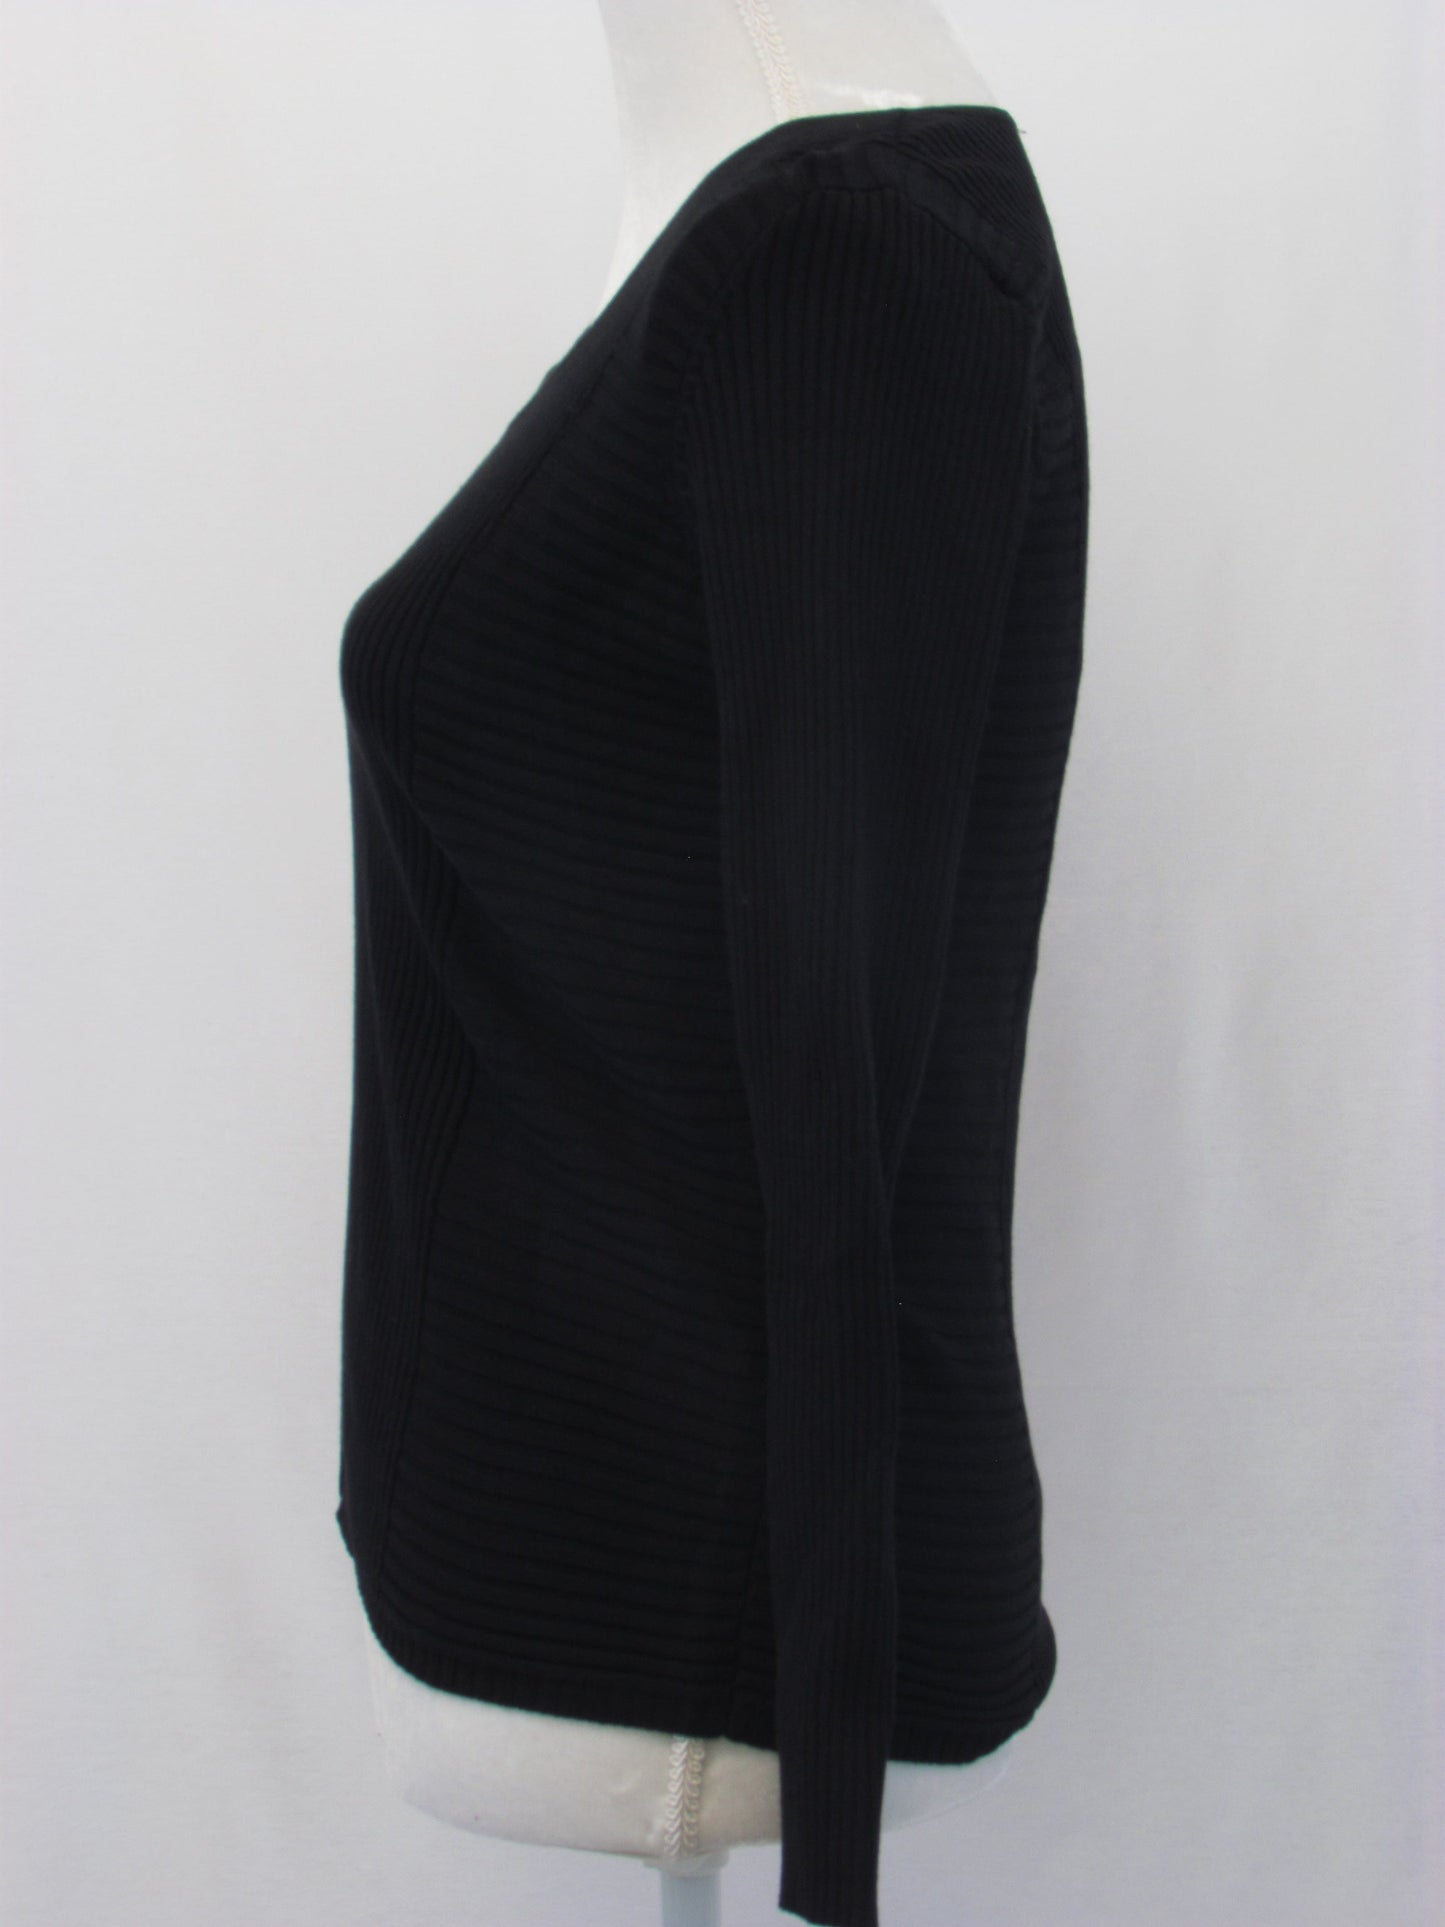 INC Sweater Top Petite Multi-Directional Ribbed Deep Black PM akrutinirali